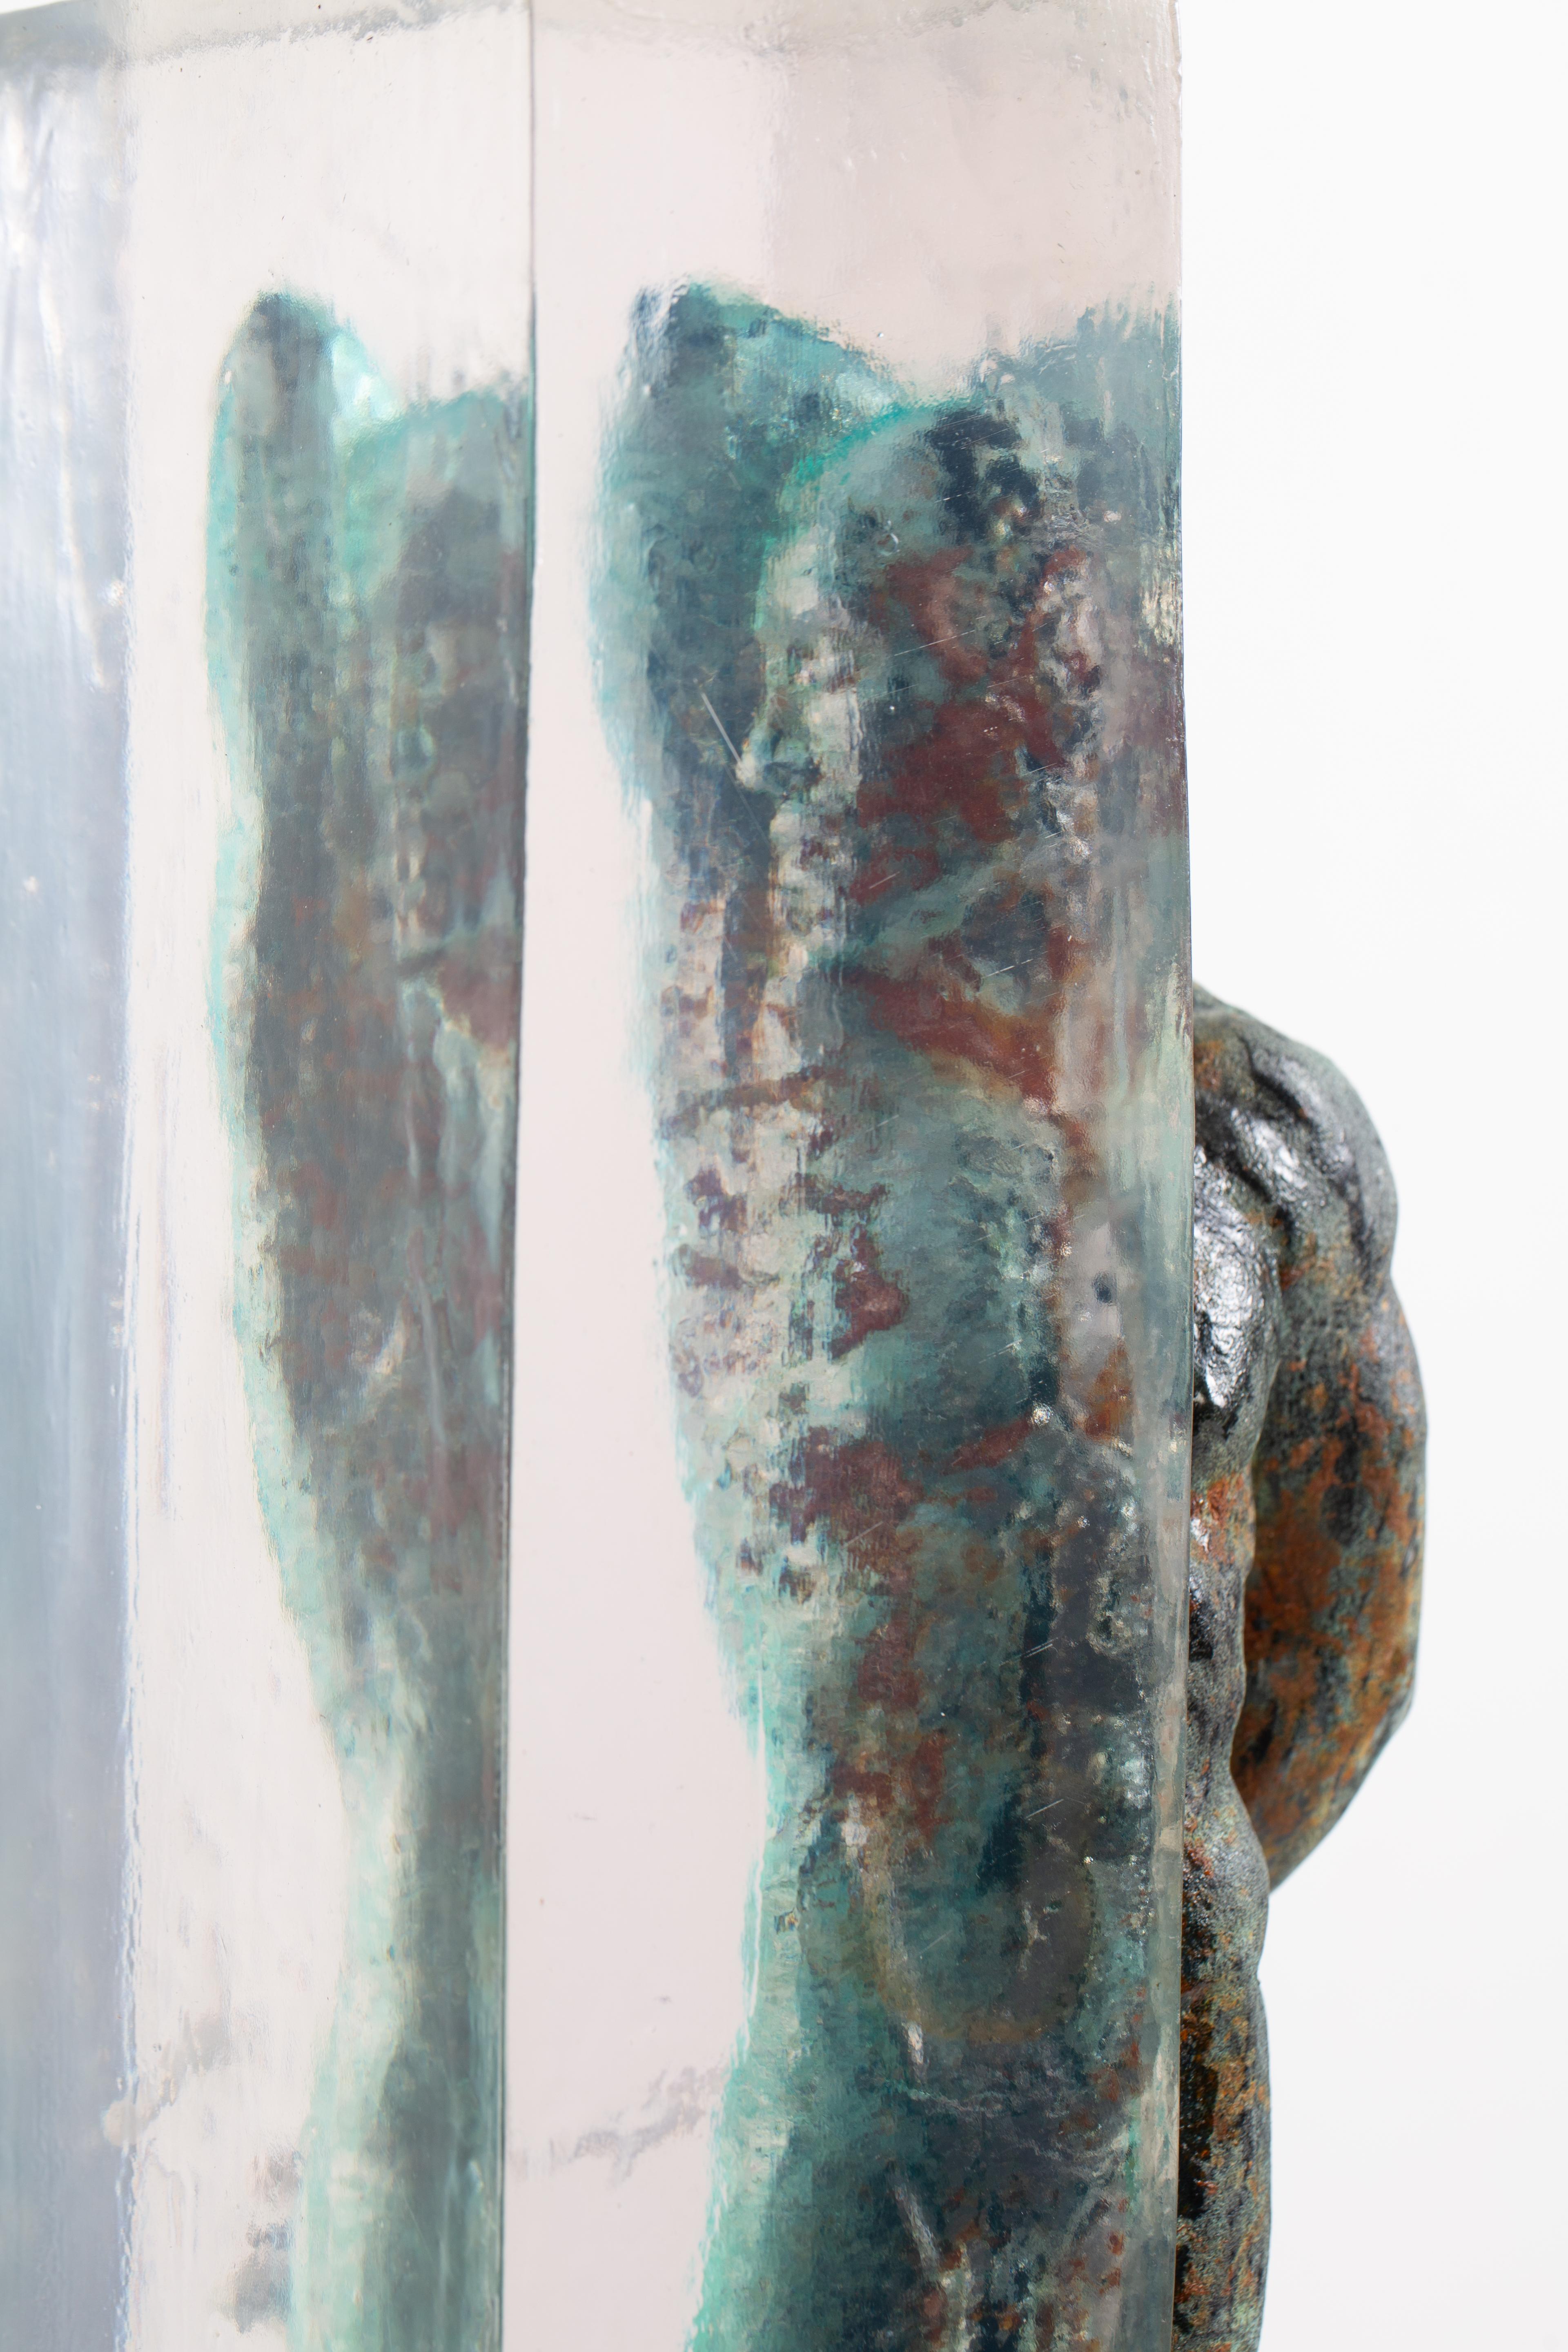 Embedded Slave - After Michelangelo, Sculpture Half Embedded in Clear Resin 6